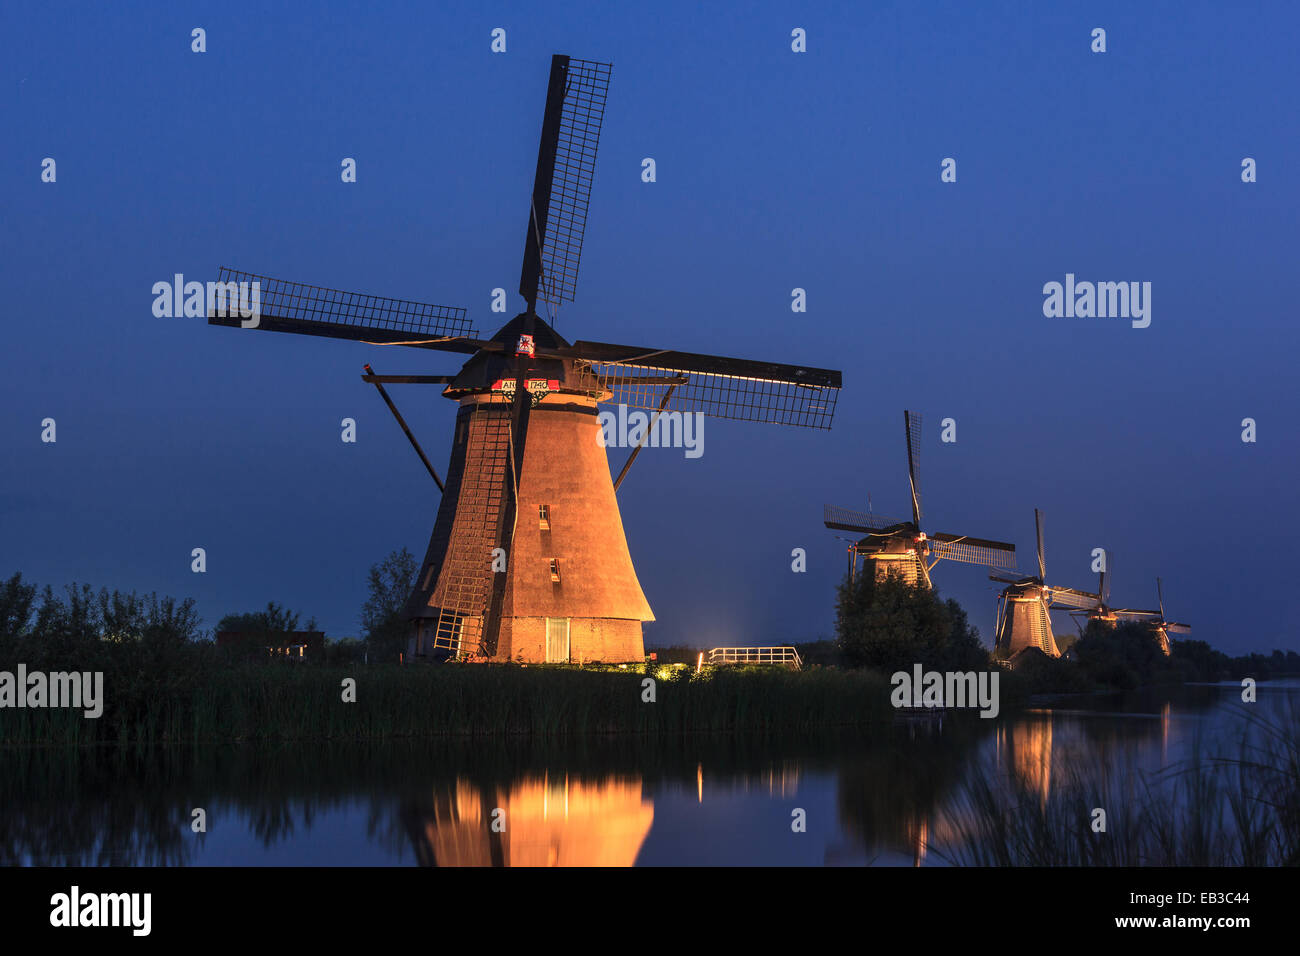 Holland, Kinderdijk dans projecteurs Banque D'Images